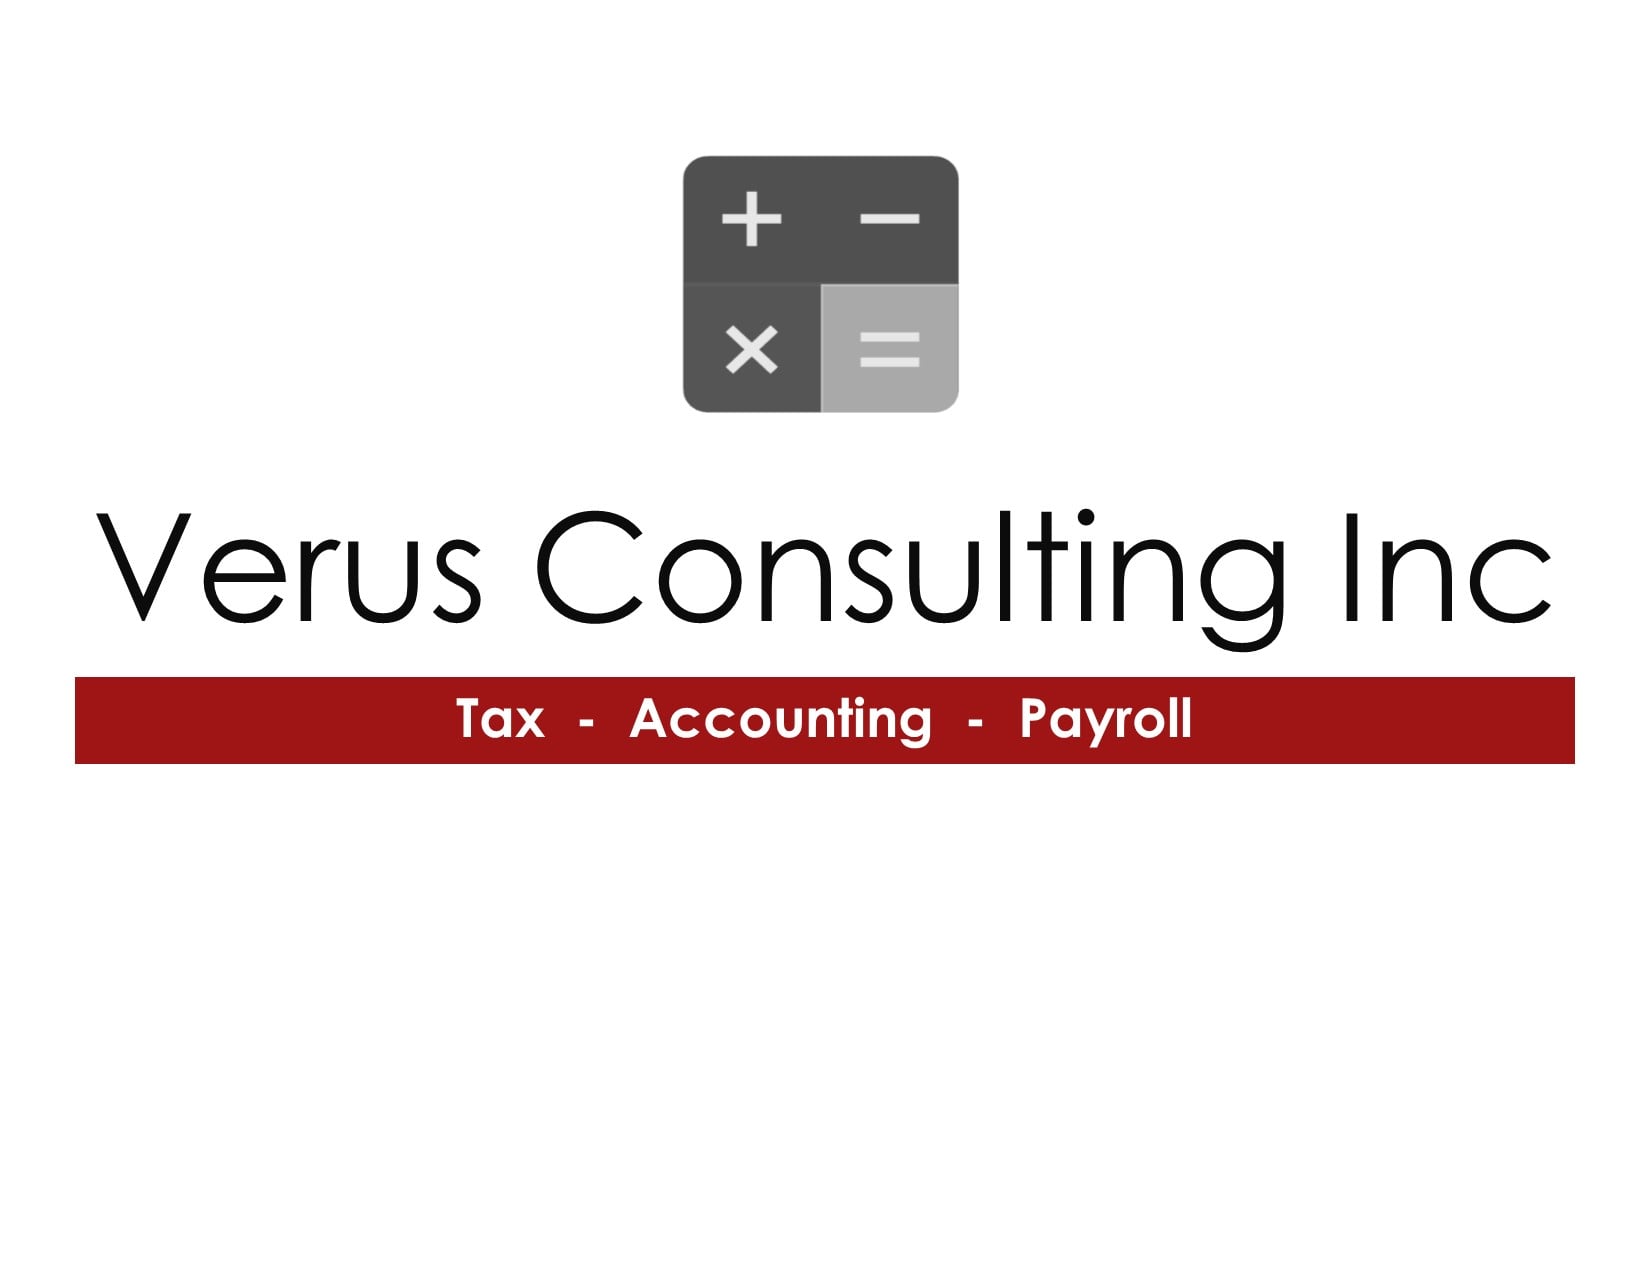 Verus Tax & Accounting 923 West Greenwood Avenue, Waukegan Illinois 60085